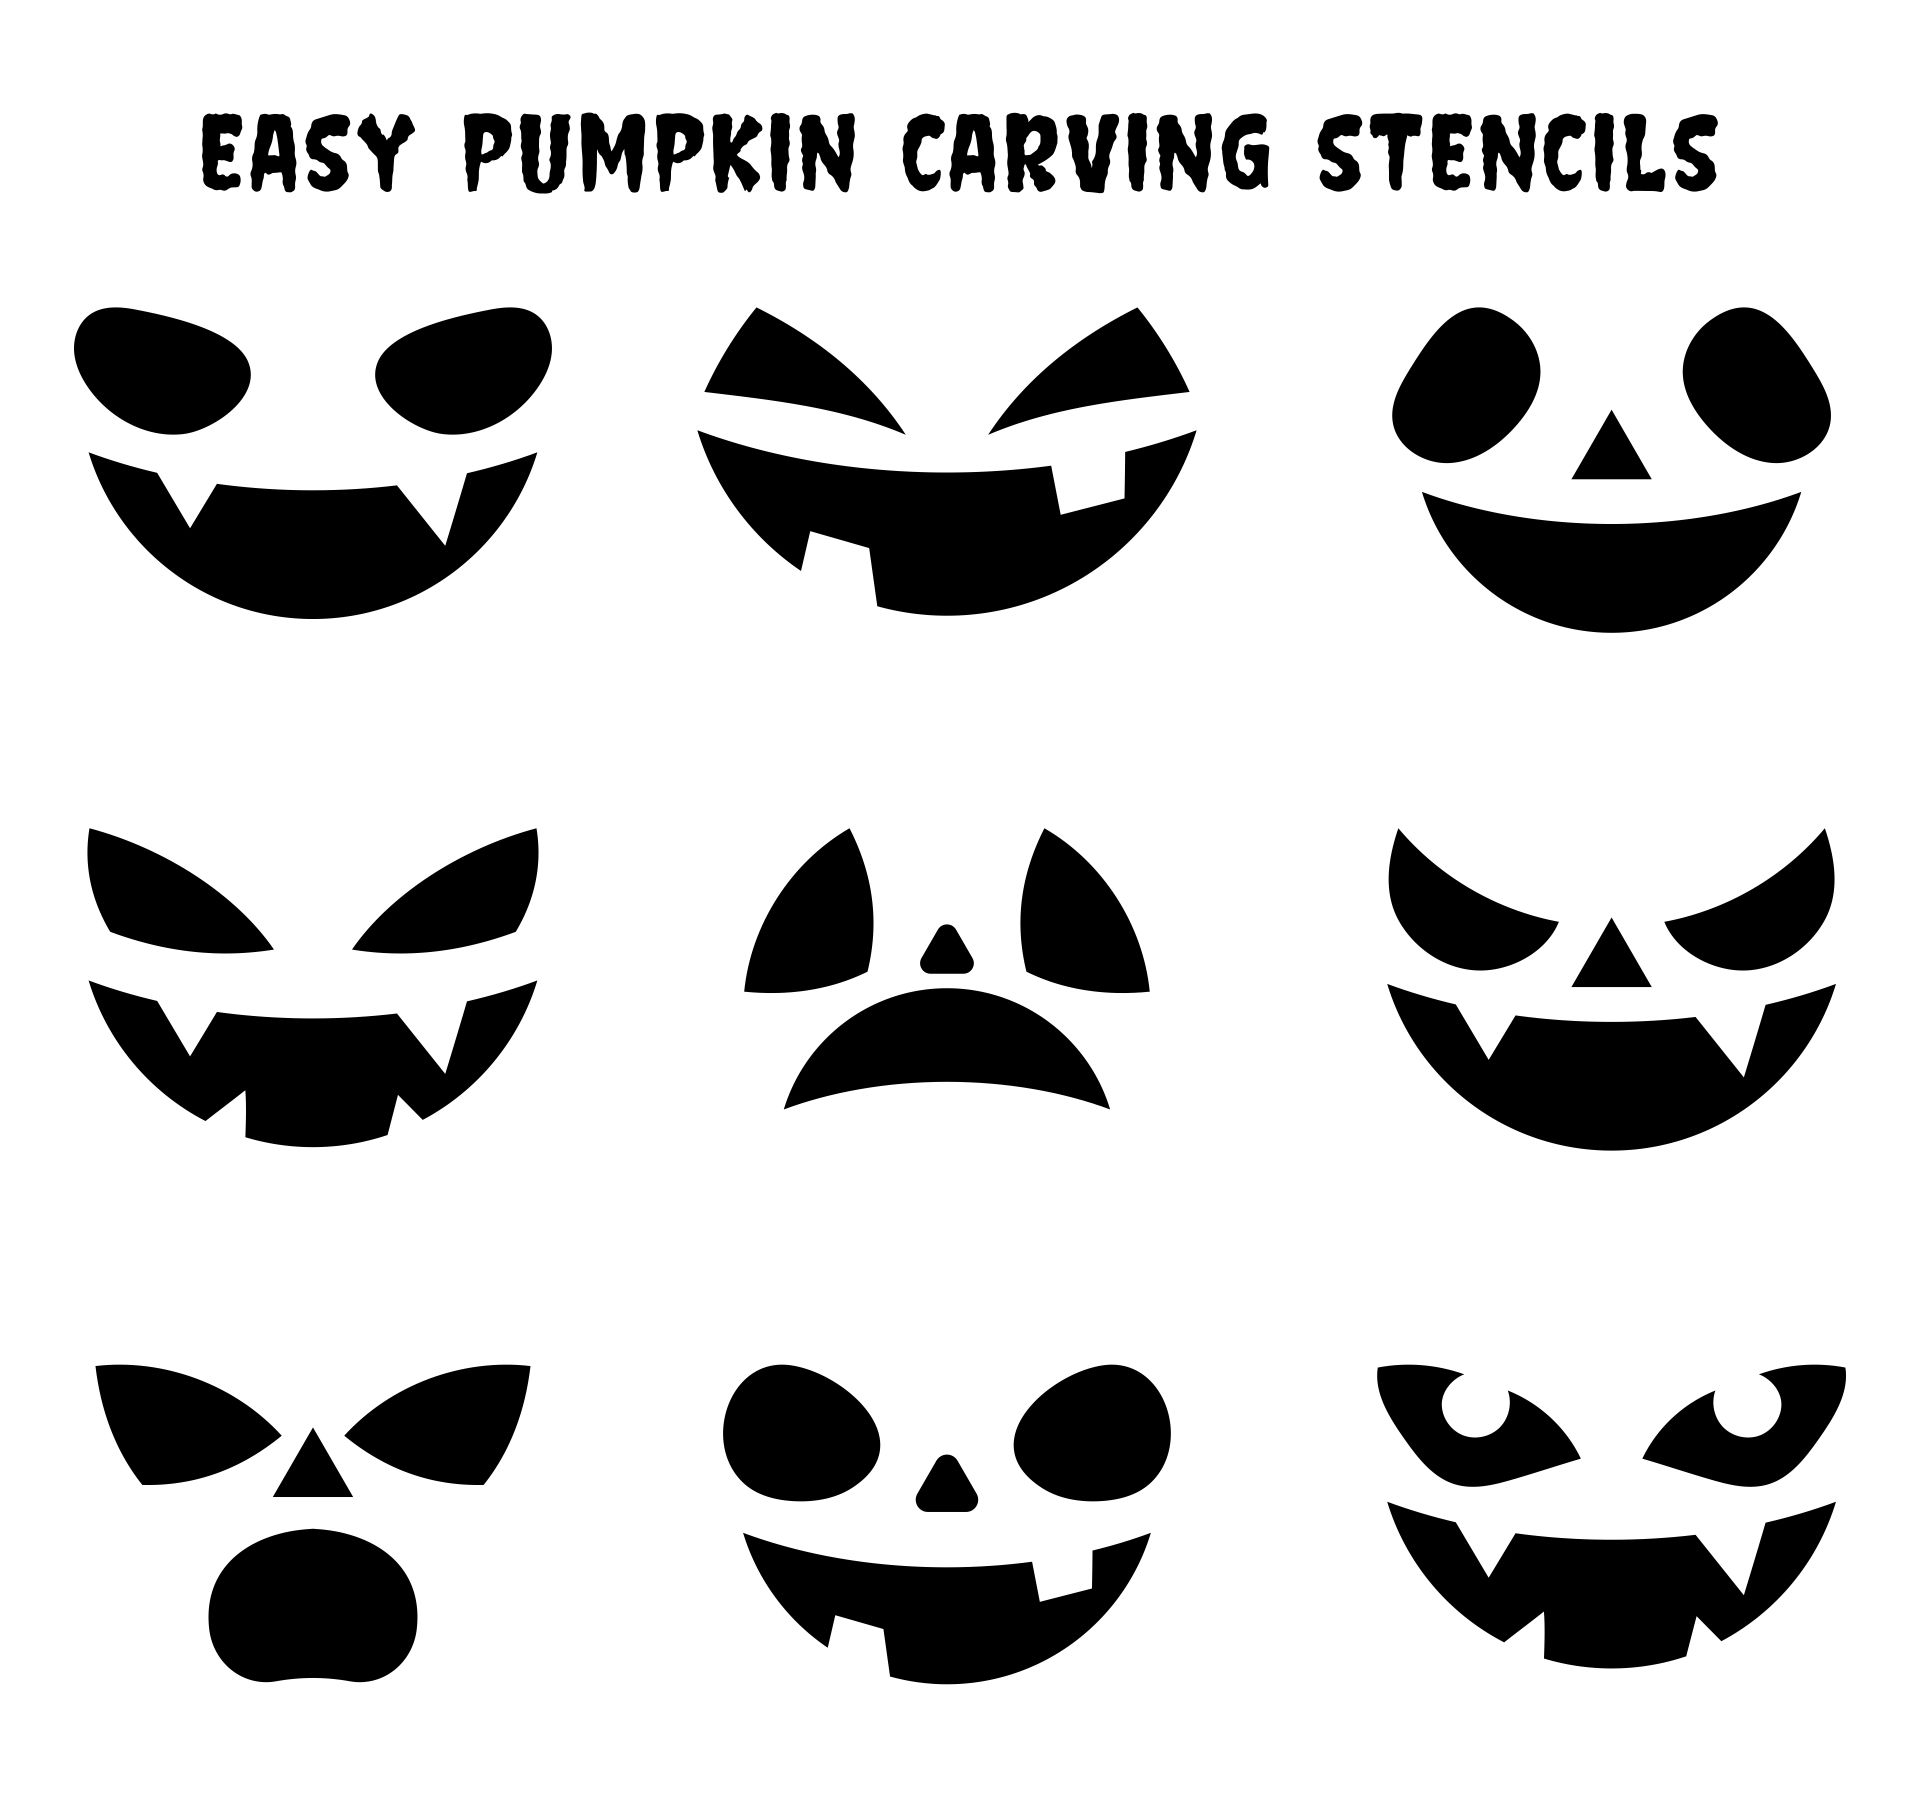 6-best-images-of-easy-pumpkin-carving-patterns-free-printable-easy-pumpkin-carving-stencils